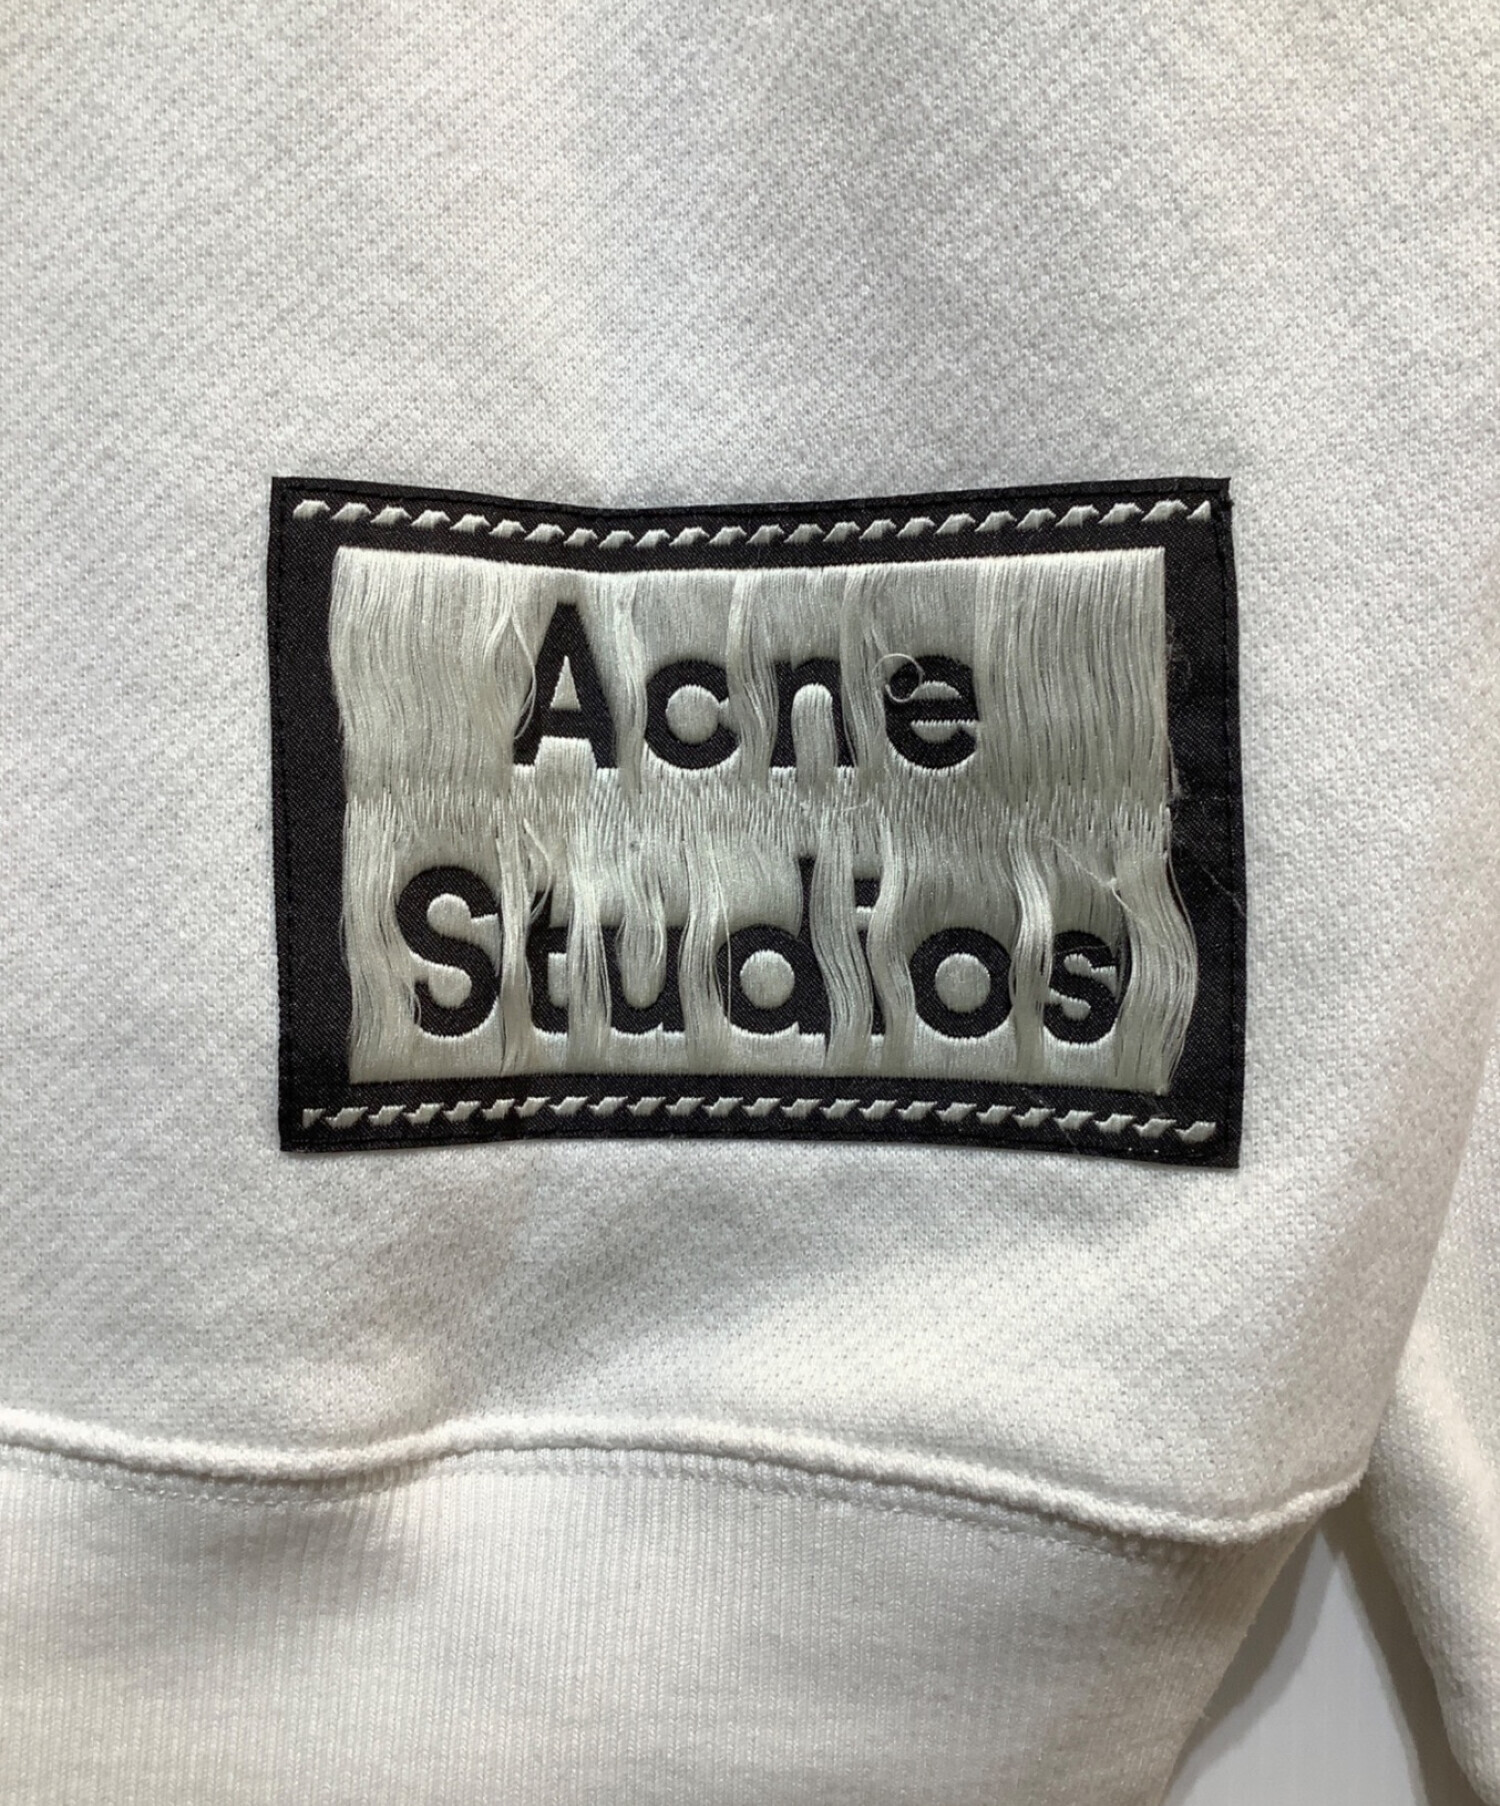 Acne studios (アクネストゥディオス) スウェット ホワイト サイズ:S